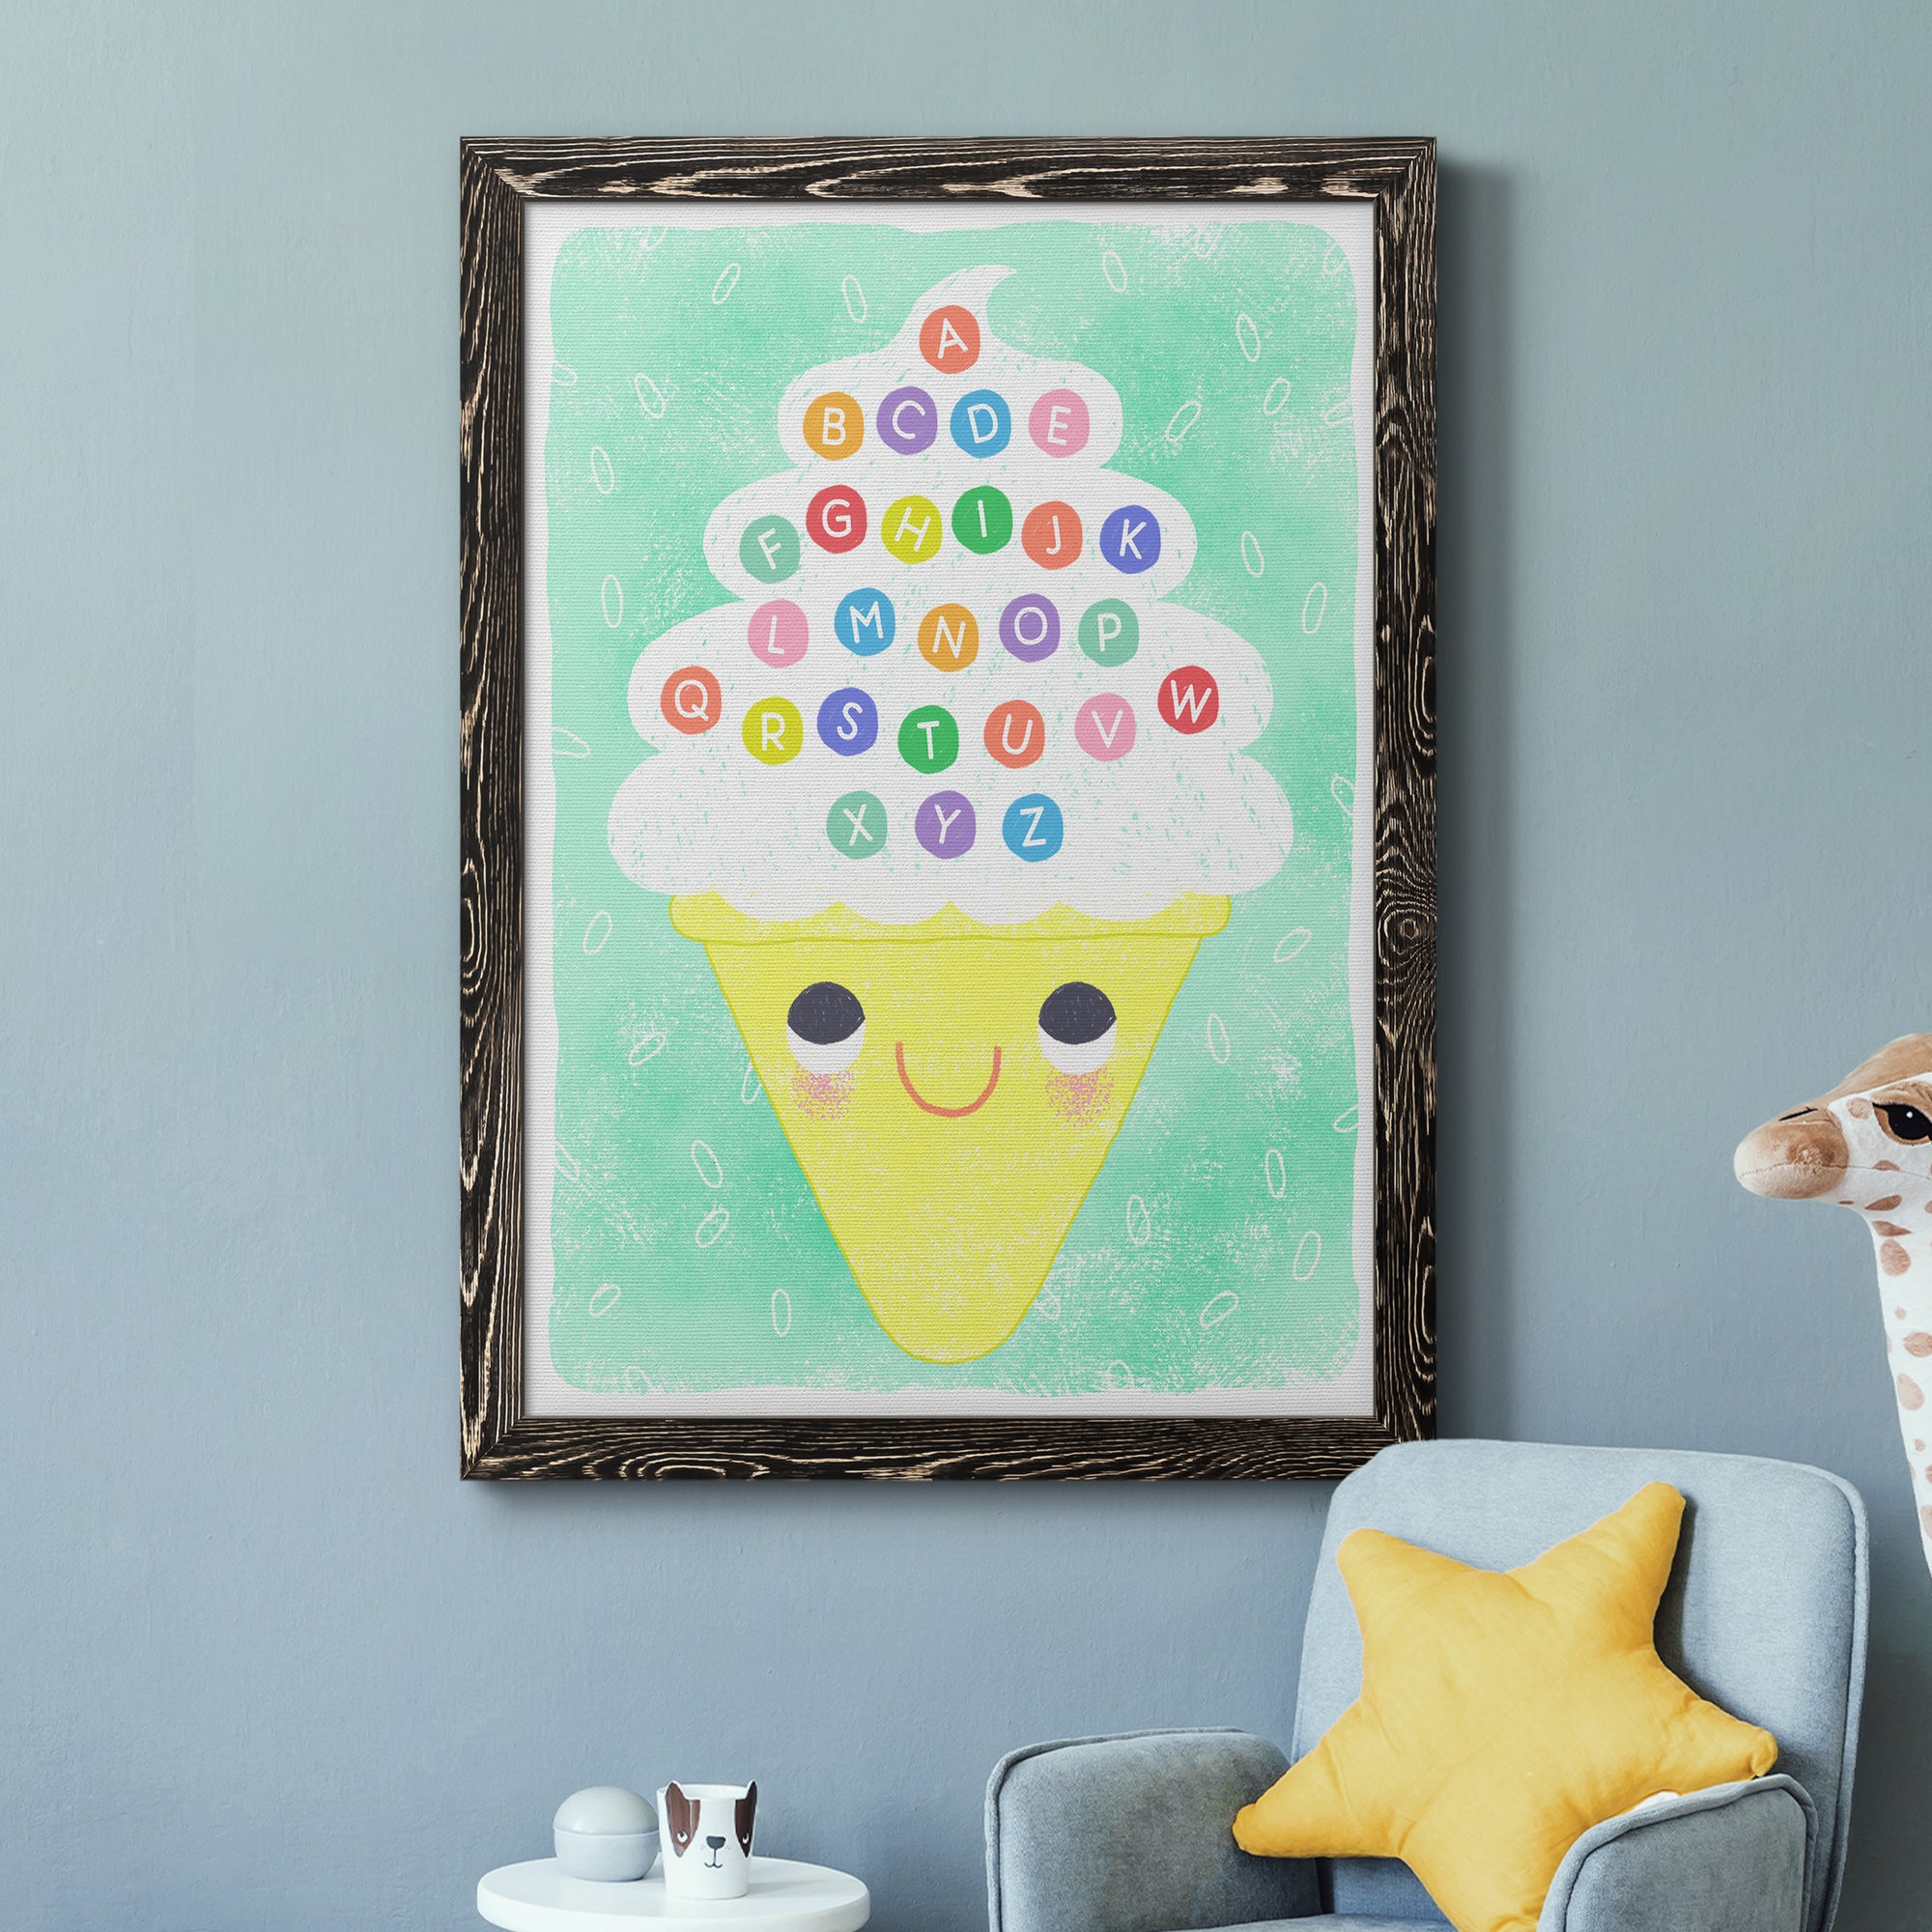 Ice Cream Alphabet - Premium Canvas Framed in Barnwood - Ready to Hang